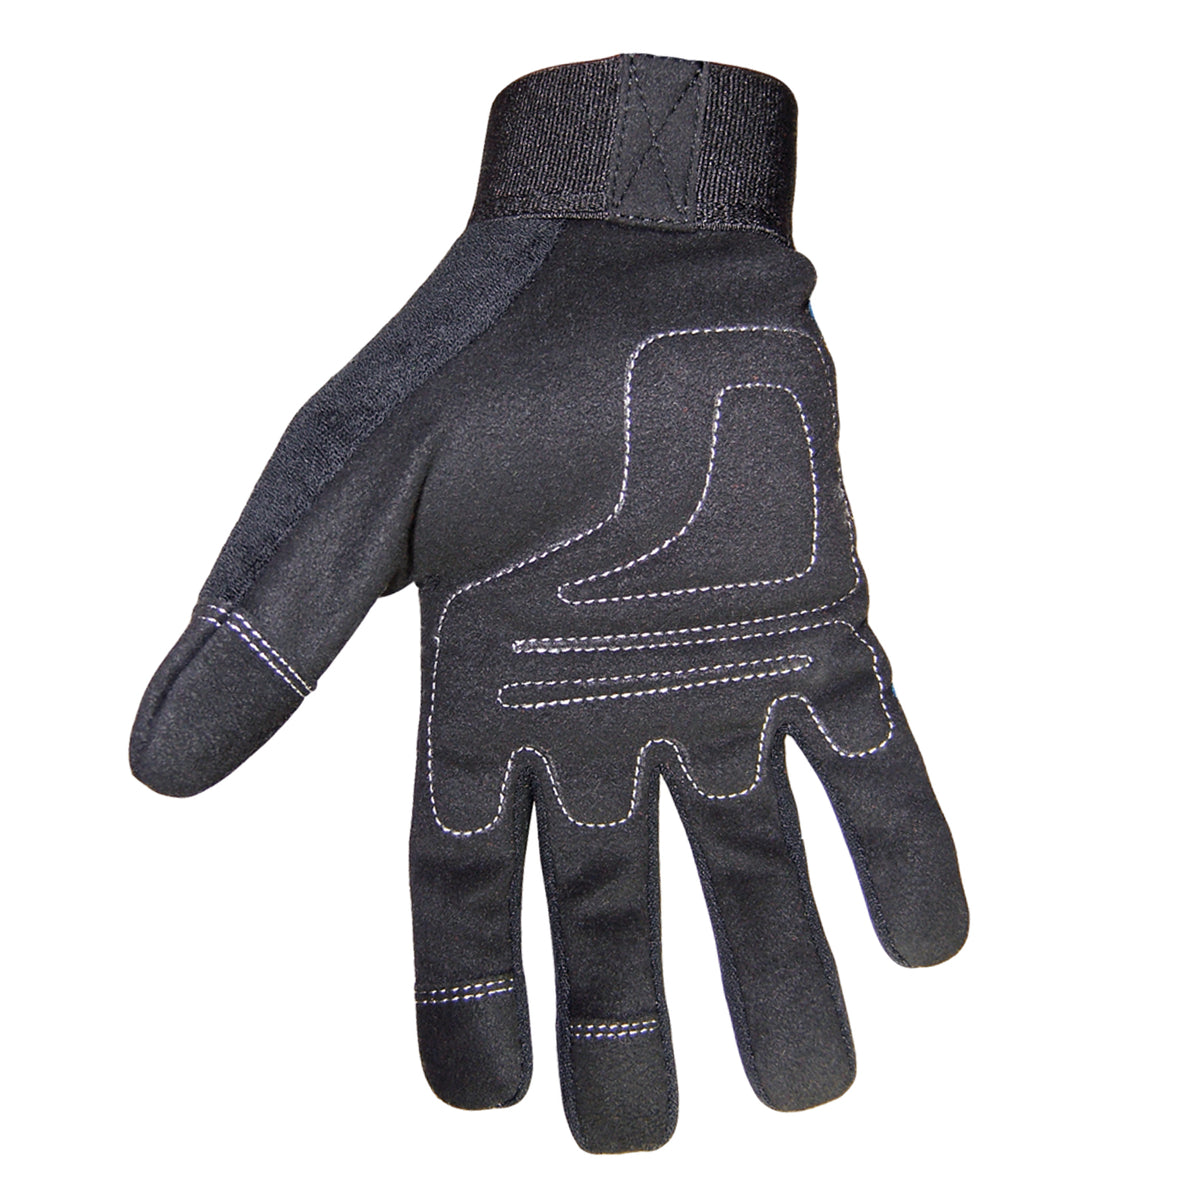 Mechanics Plus Gloves